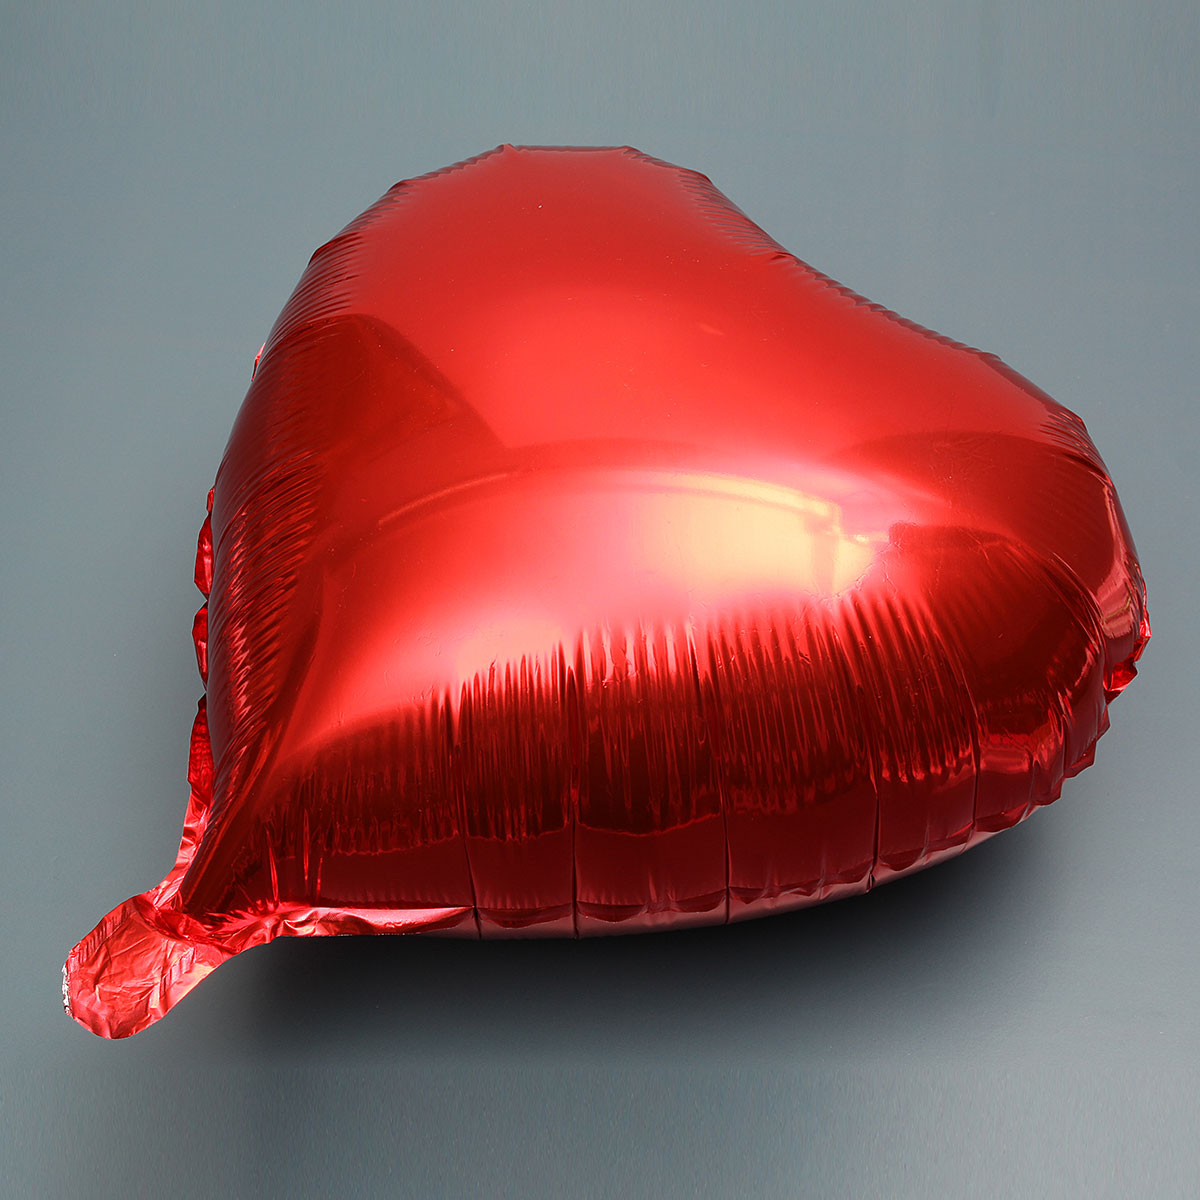 1Pcs-18-Aluminum-Foil-Balloon-Metallic-Heart-Star-Lollipop-Shape-Wedding-Party-Decor-Supply-1037493